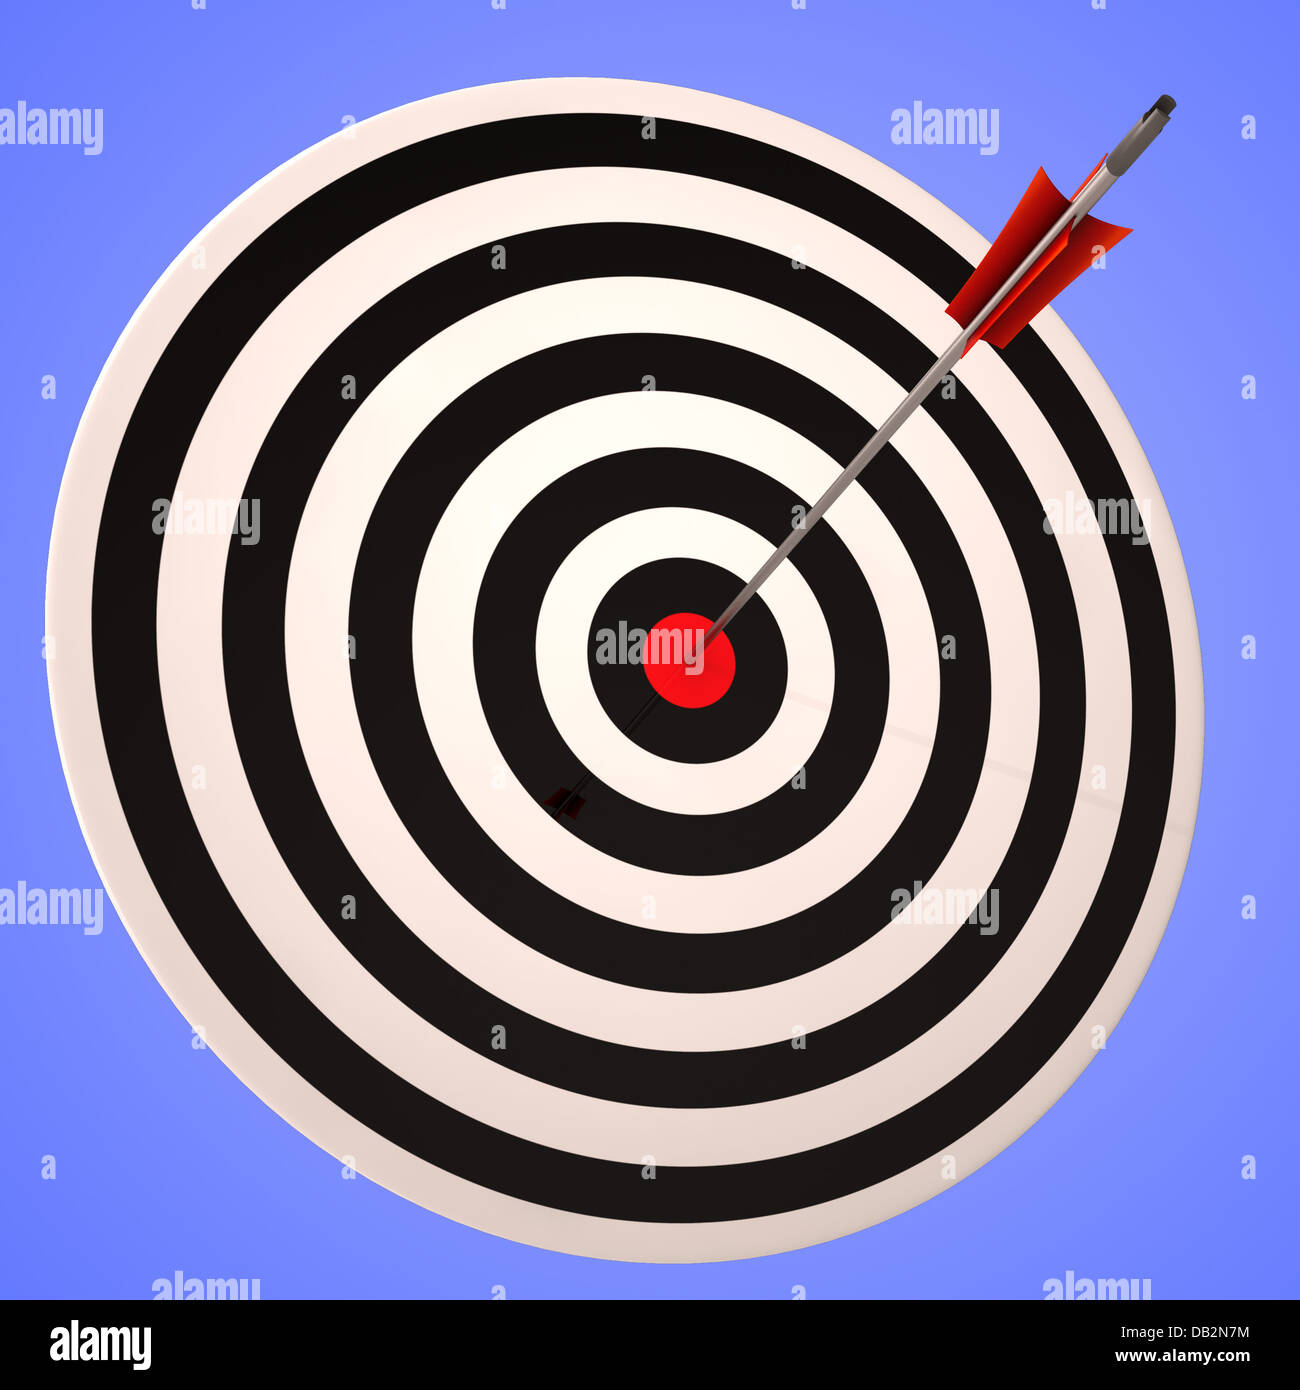 Bulls eye Target Shows Precise Winning Strategic Goal Stock Photo